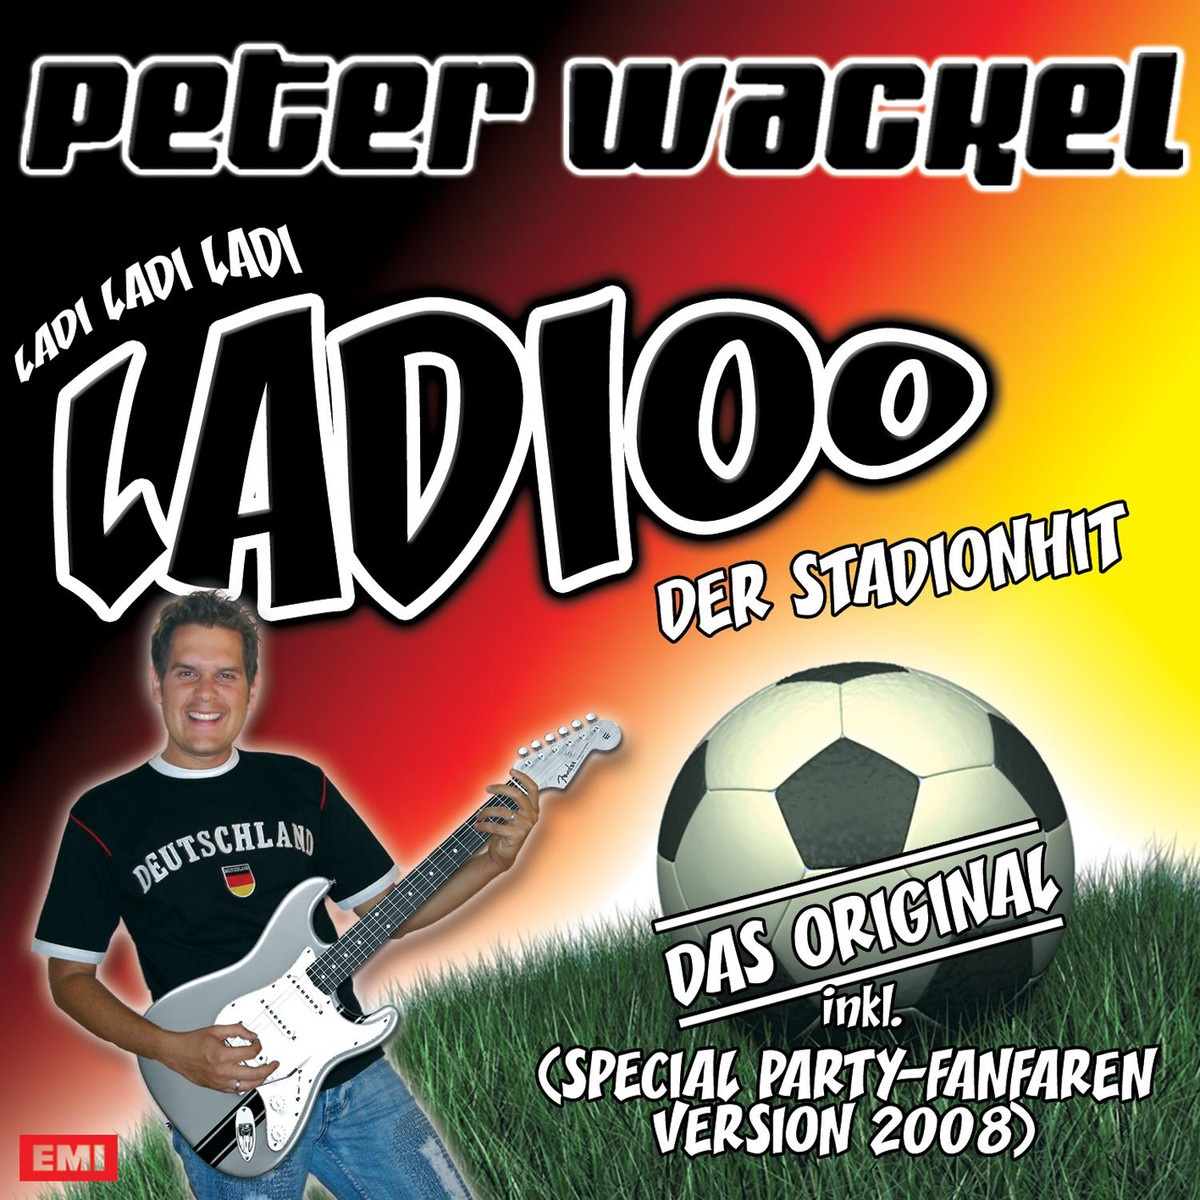 Ladioo (Special Party-Fanfaren Version 2008)